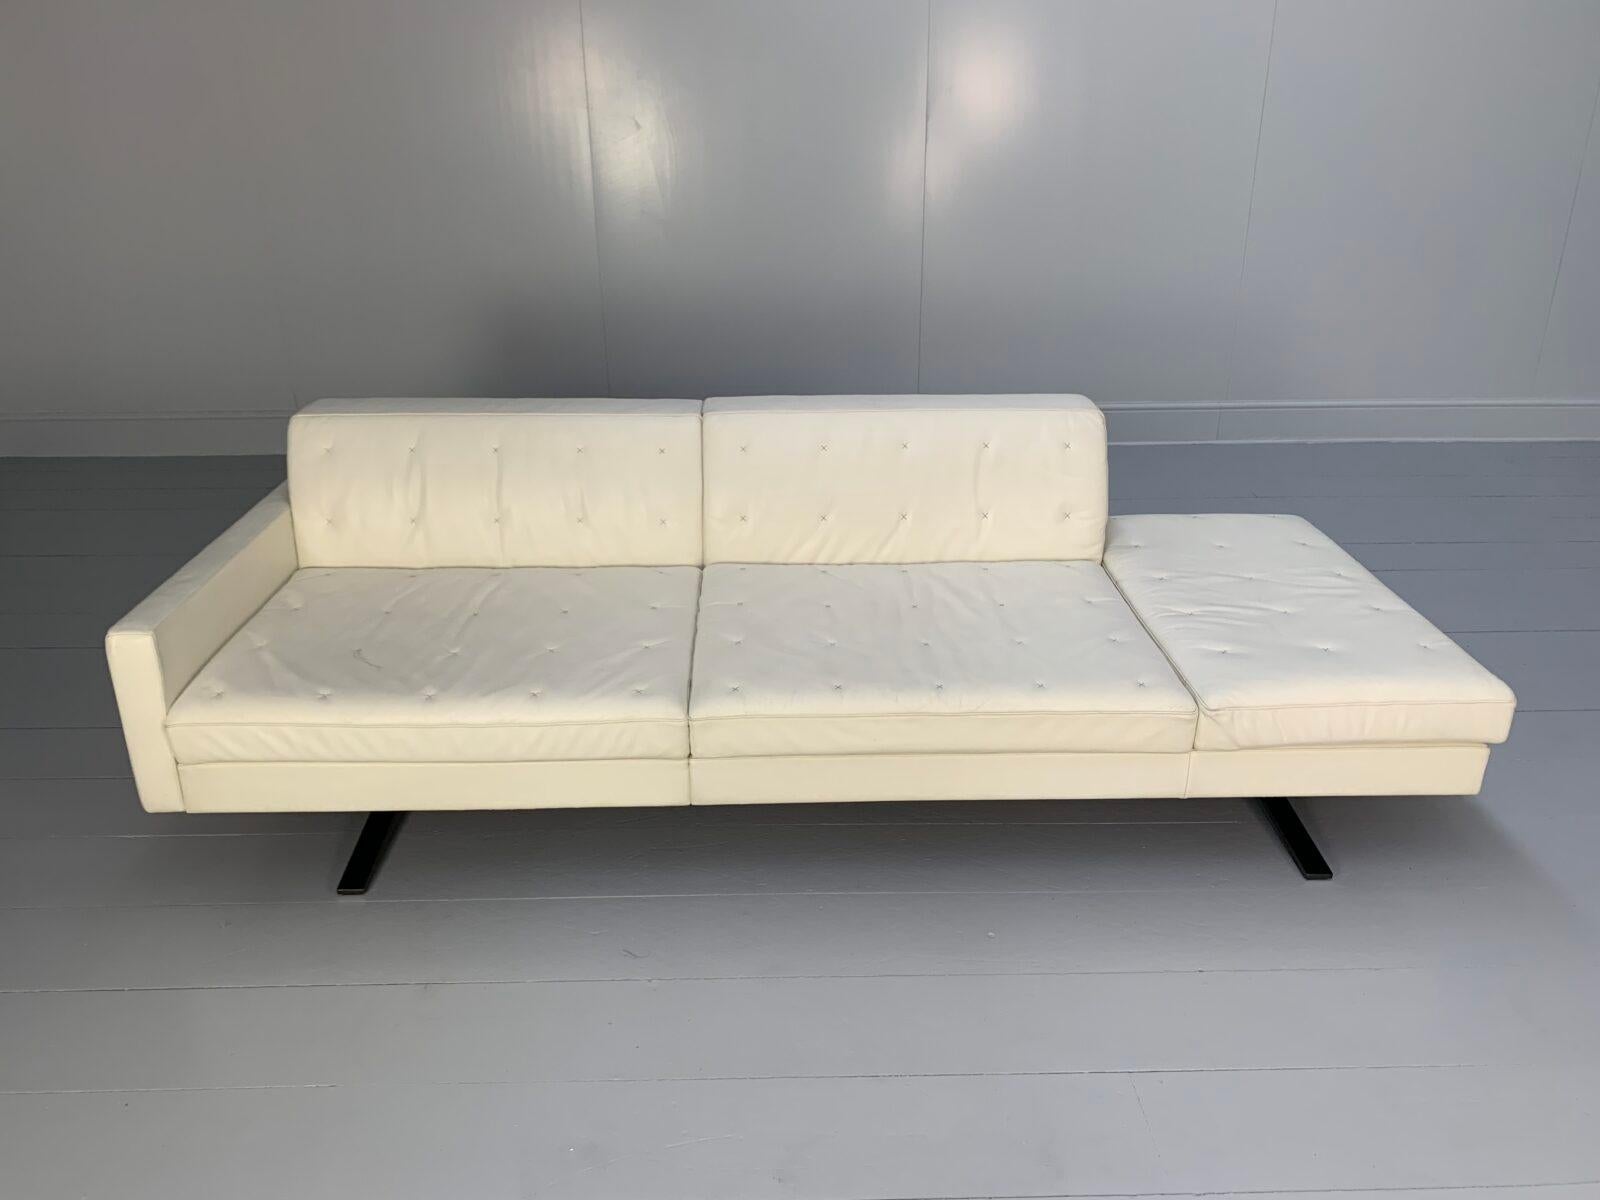 Poltrona Frau “Kennedee” 3-Seat Sofa – In Ivory “Pelle Frau” Leather For Sale 1